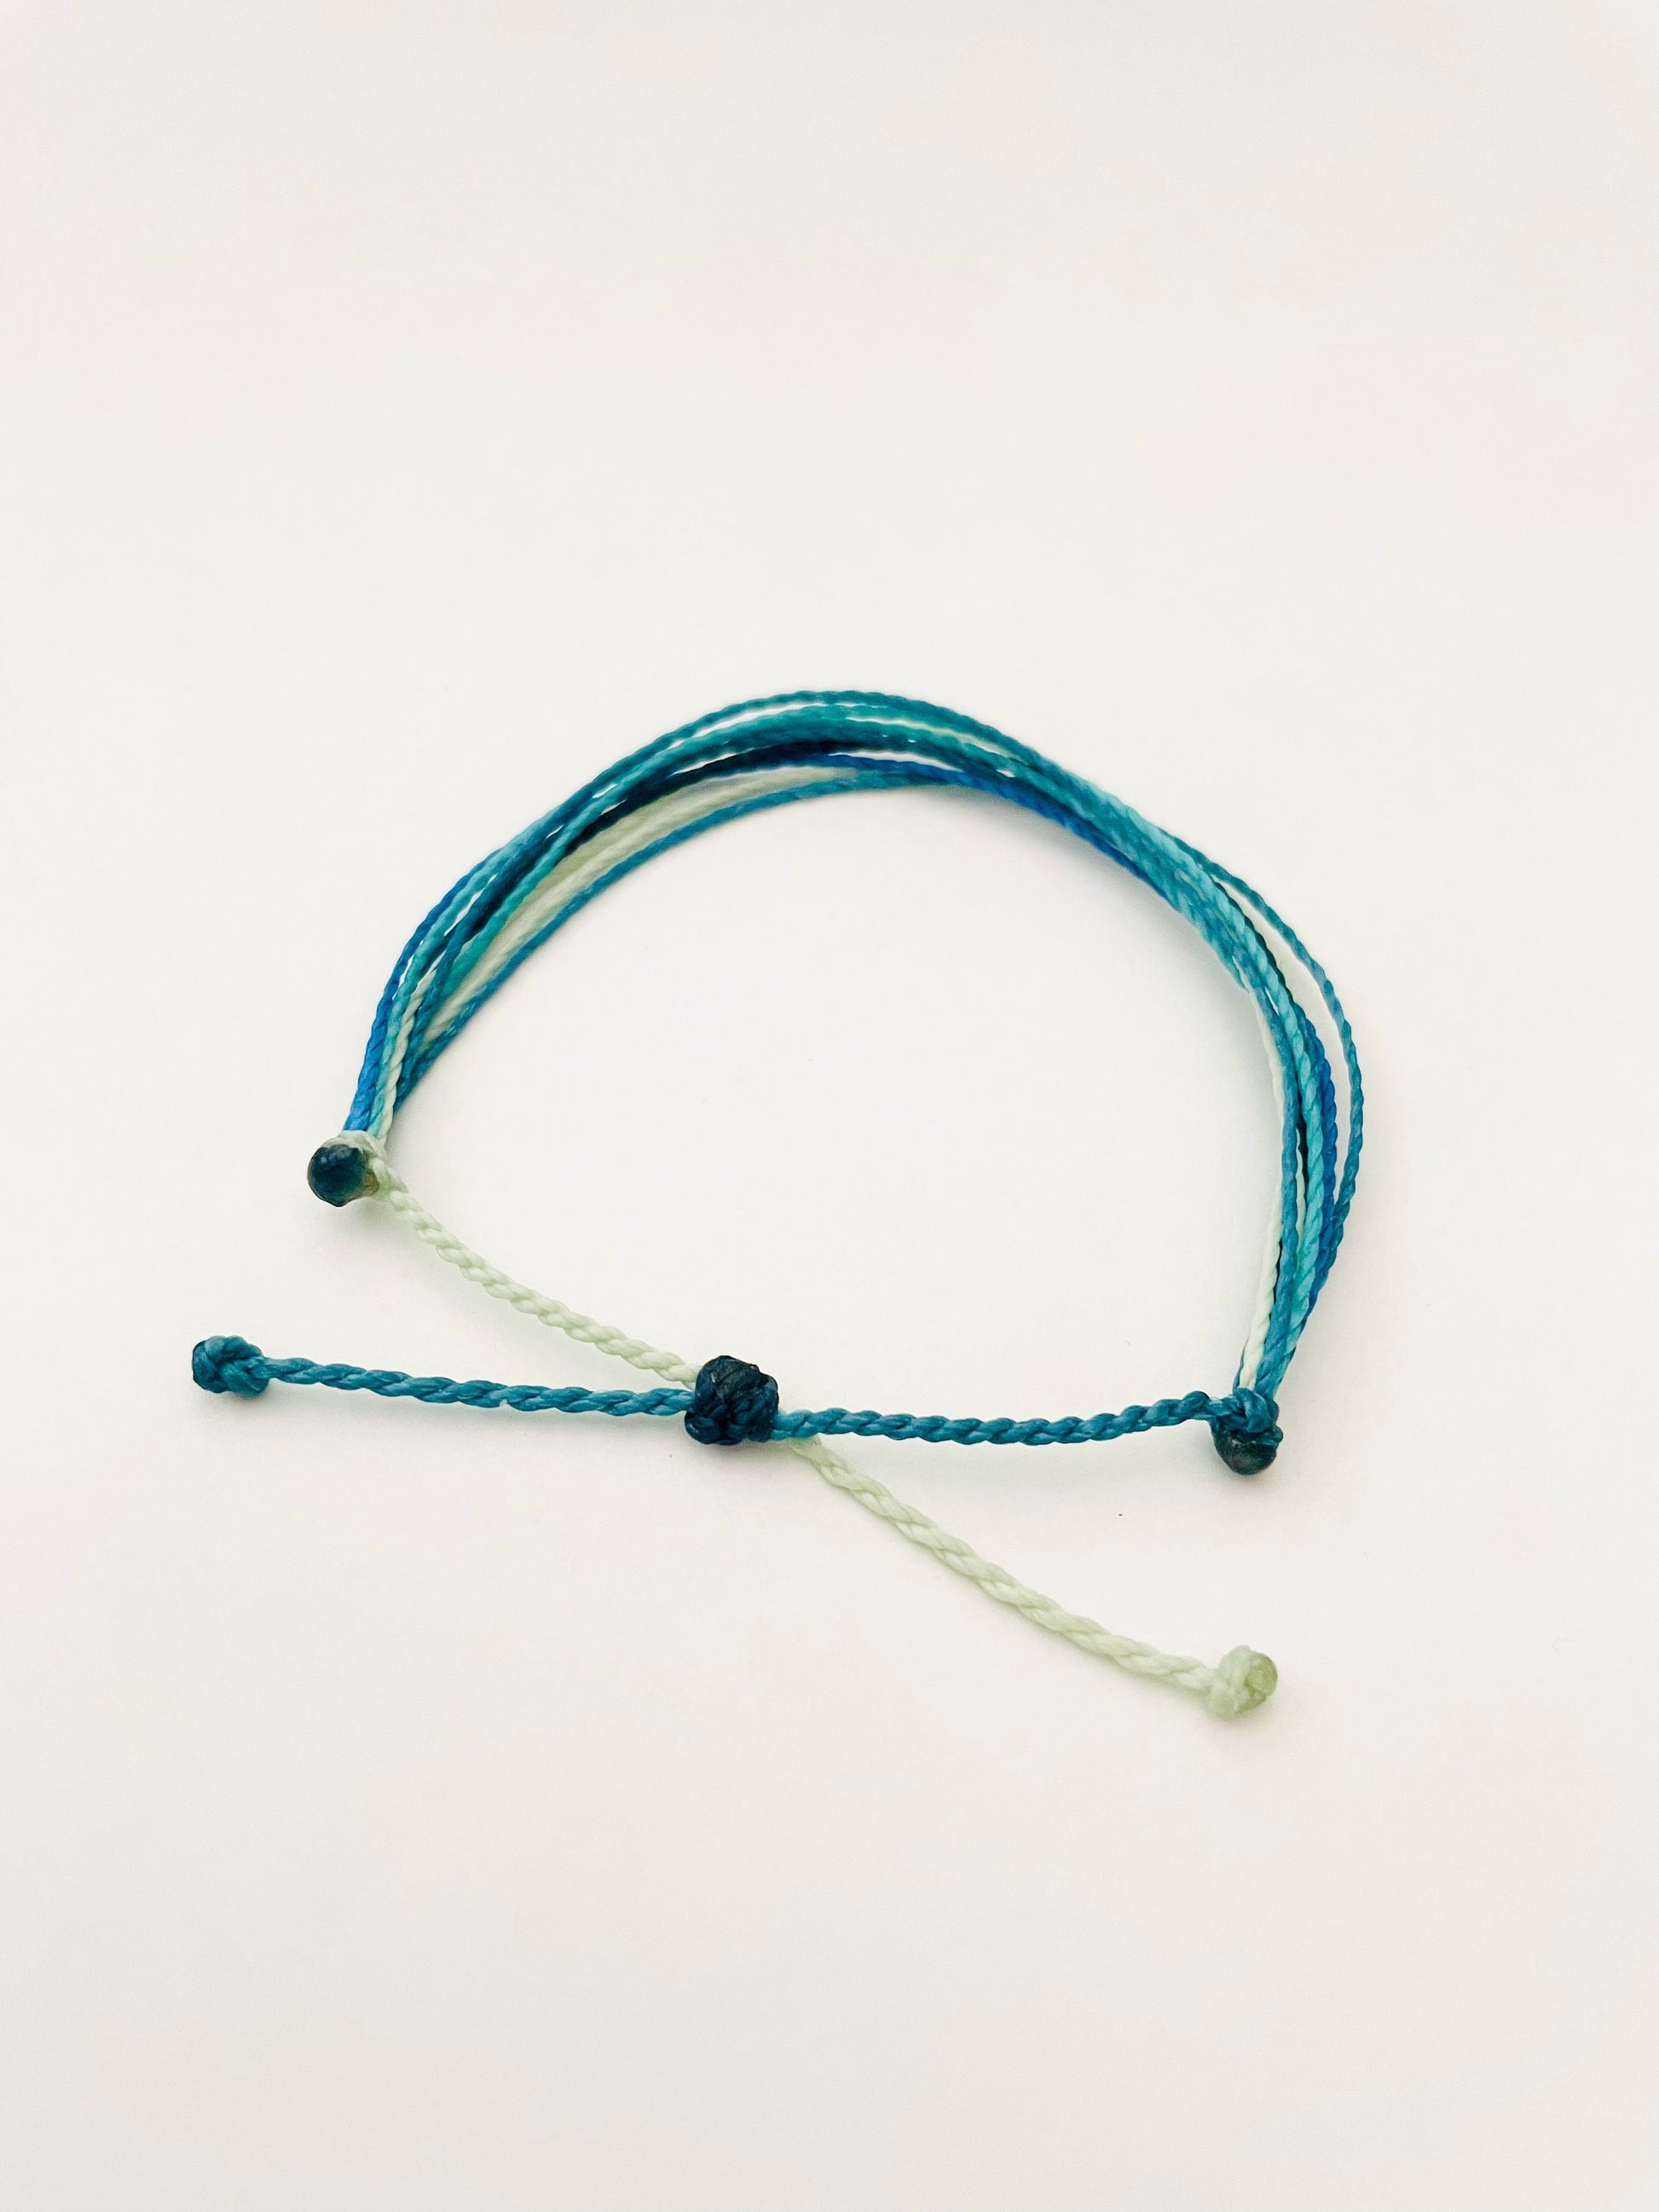 Cord Bracelet, Surfer Bracelet, Adjustable Bracelet, String Bracelet, Waterproof, Handmade